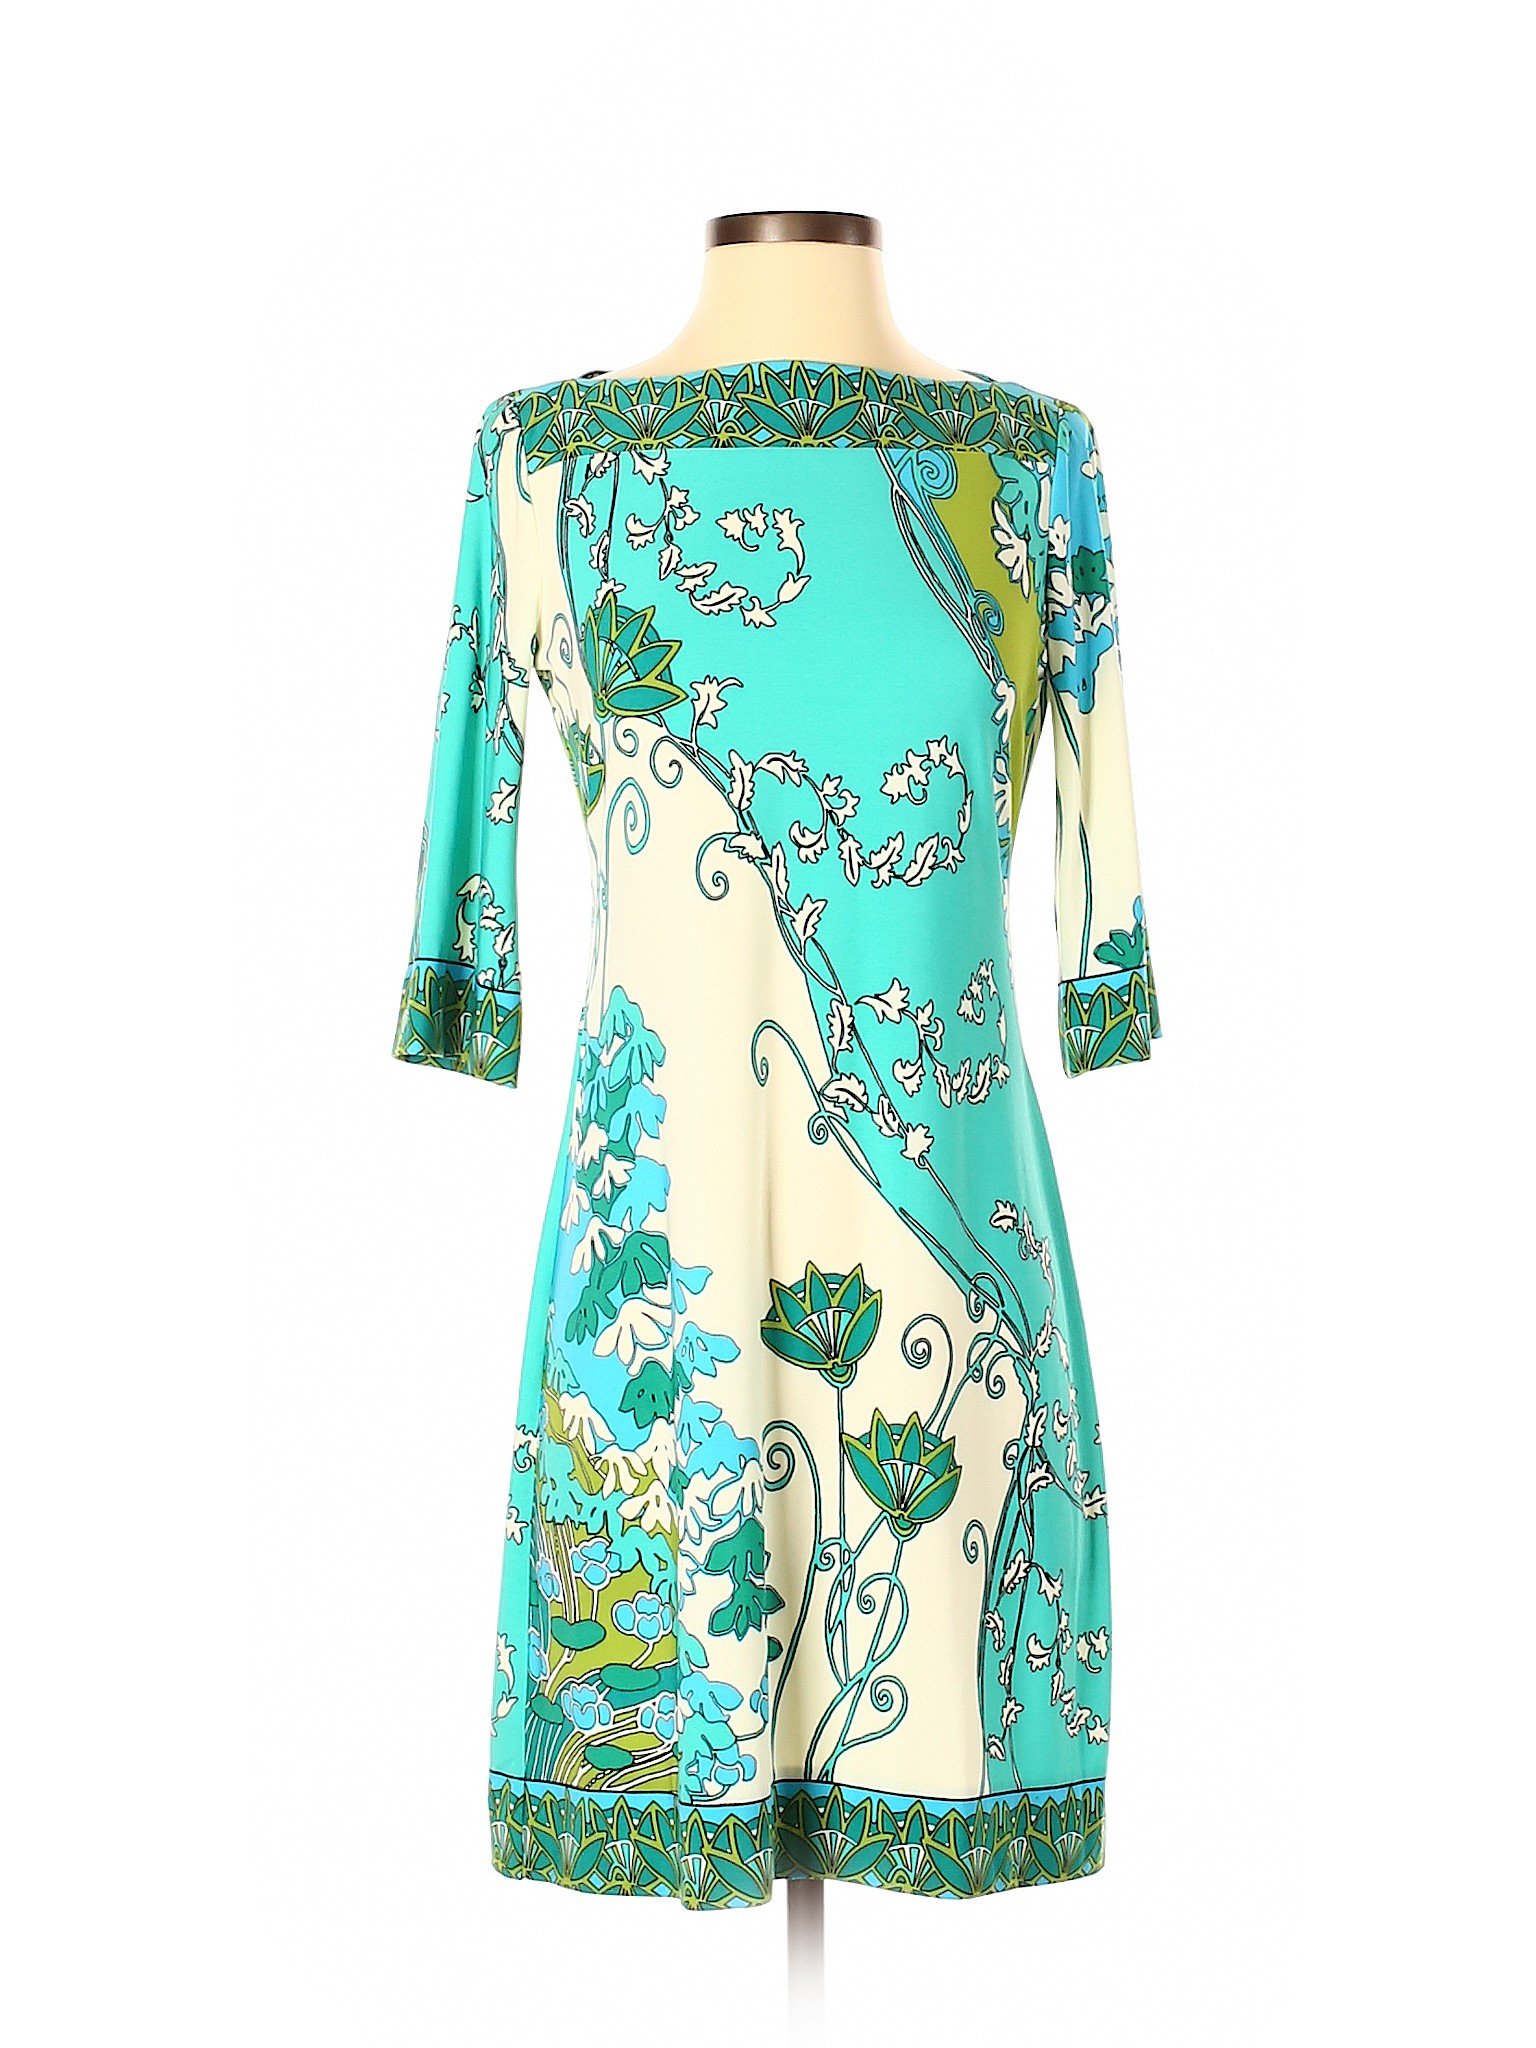 Donna Morgan Women Green Casual Dress 4 Petites | eBay